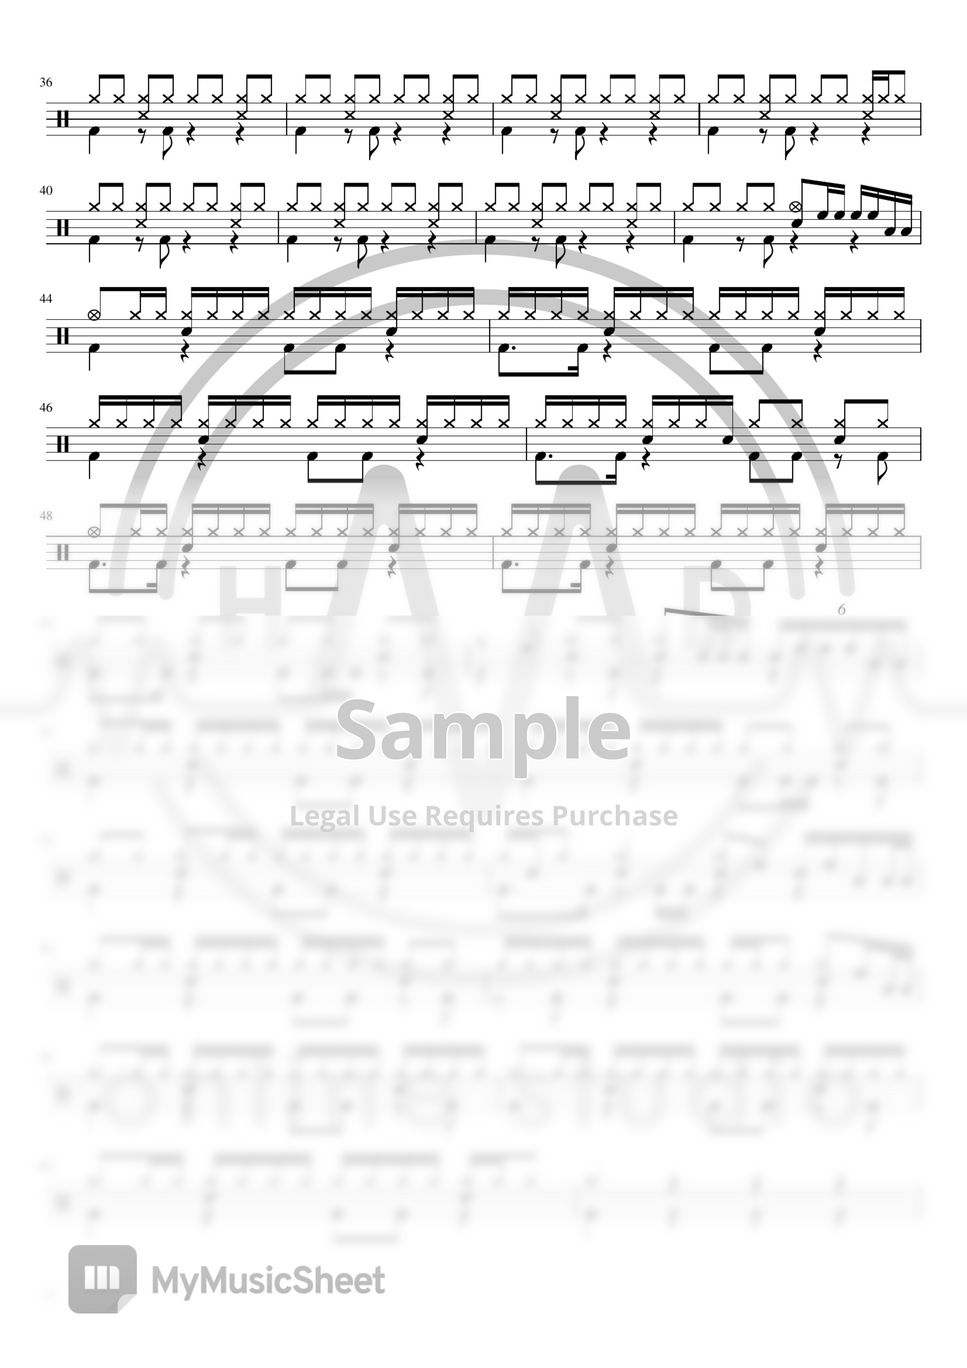 LiSA - 炎 (Drum) by HMD online studio